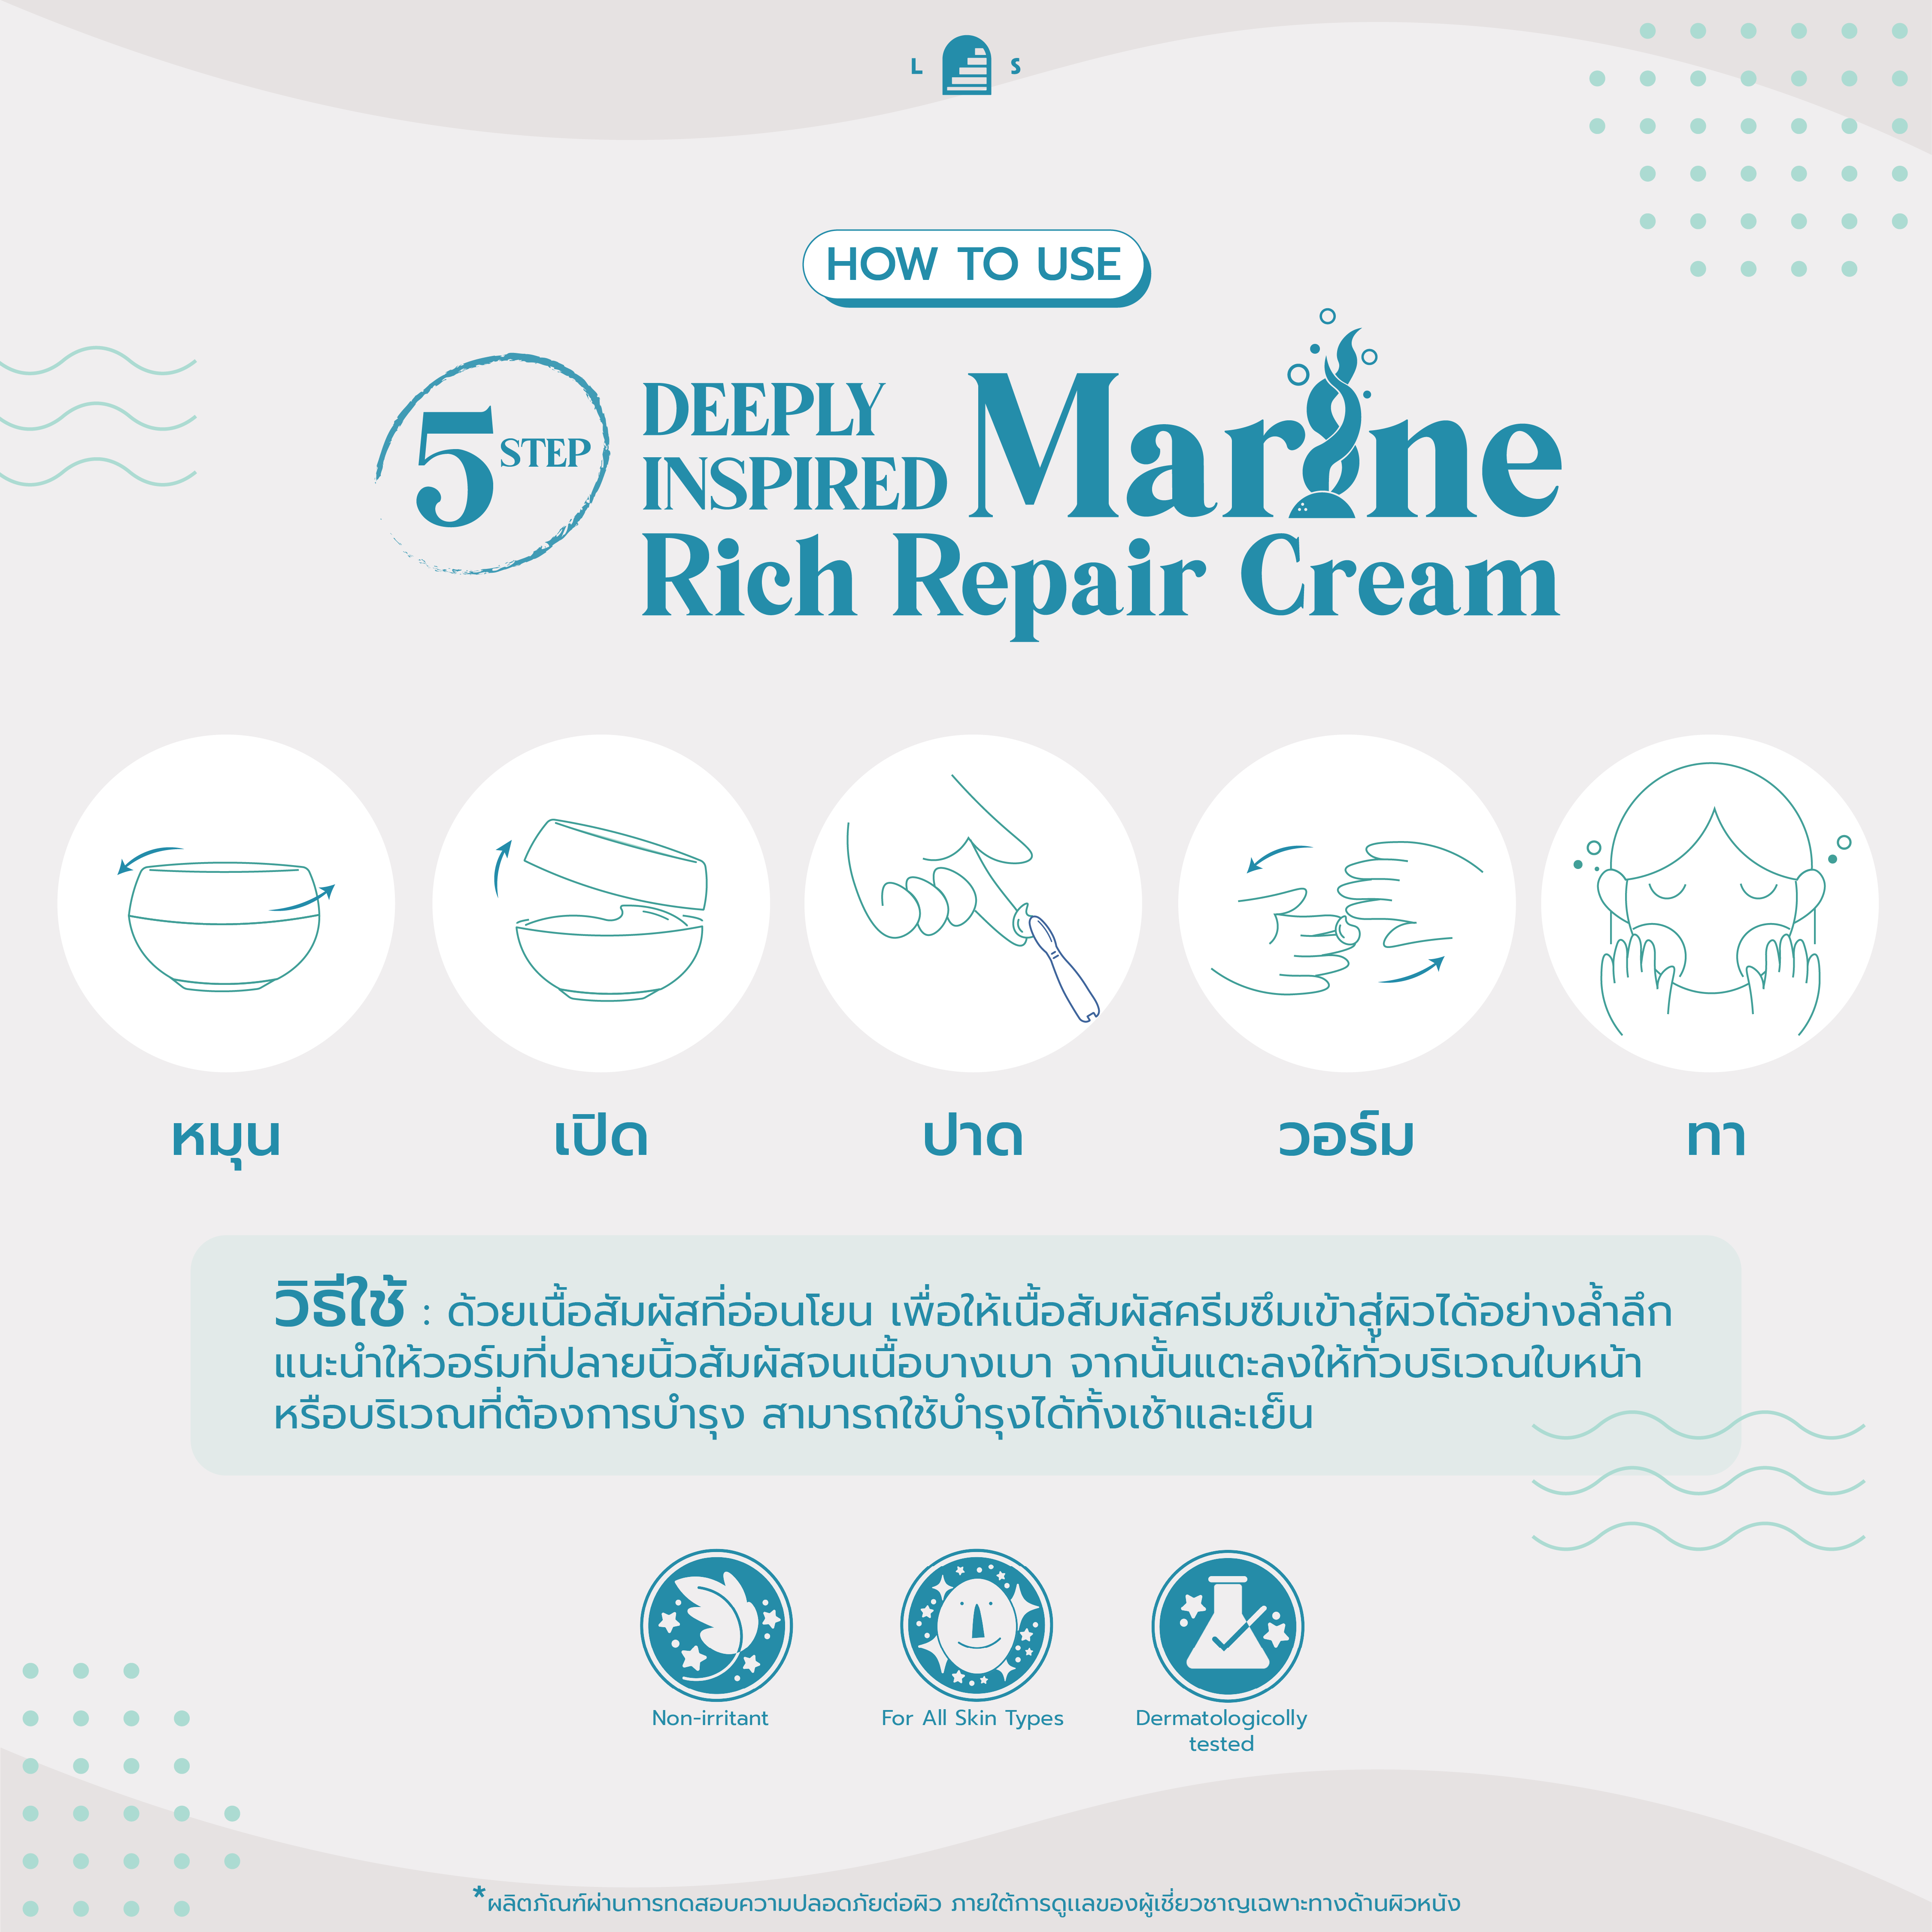 Deeply Inspired Marine Rich Repair Cream